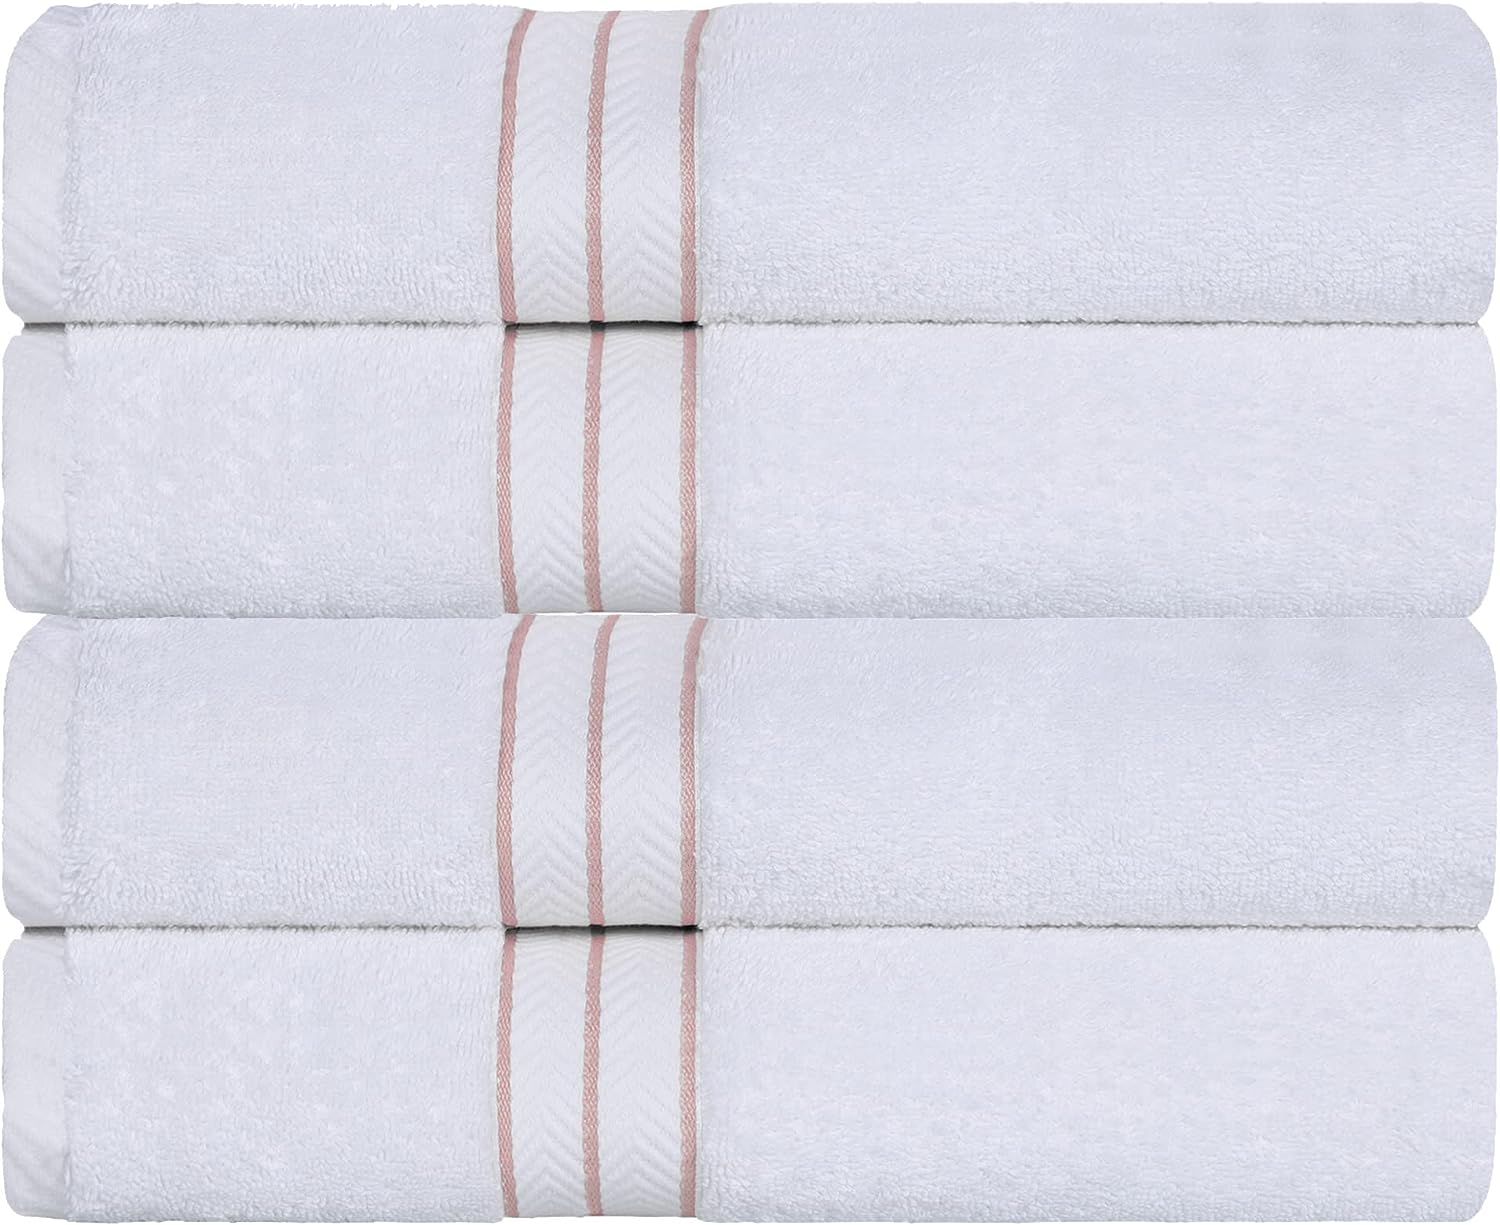 Superior Ultra-Plush Turkish Cotton Super Absorbent Solid Bath Towel Set of 4 - Tea Rose